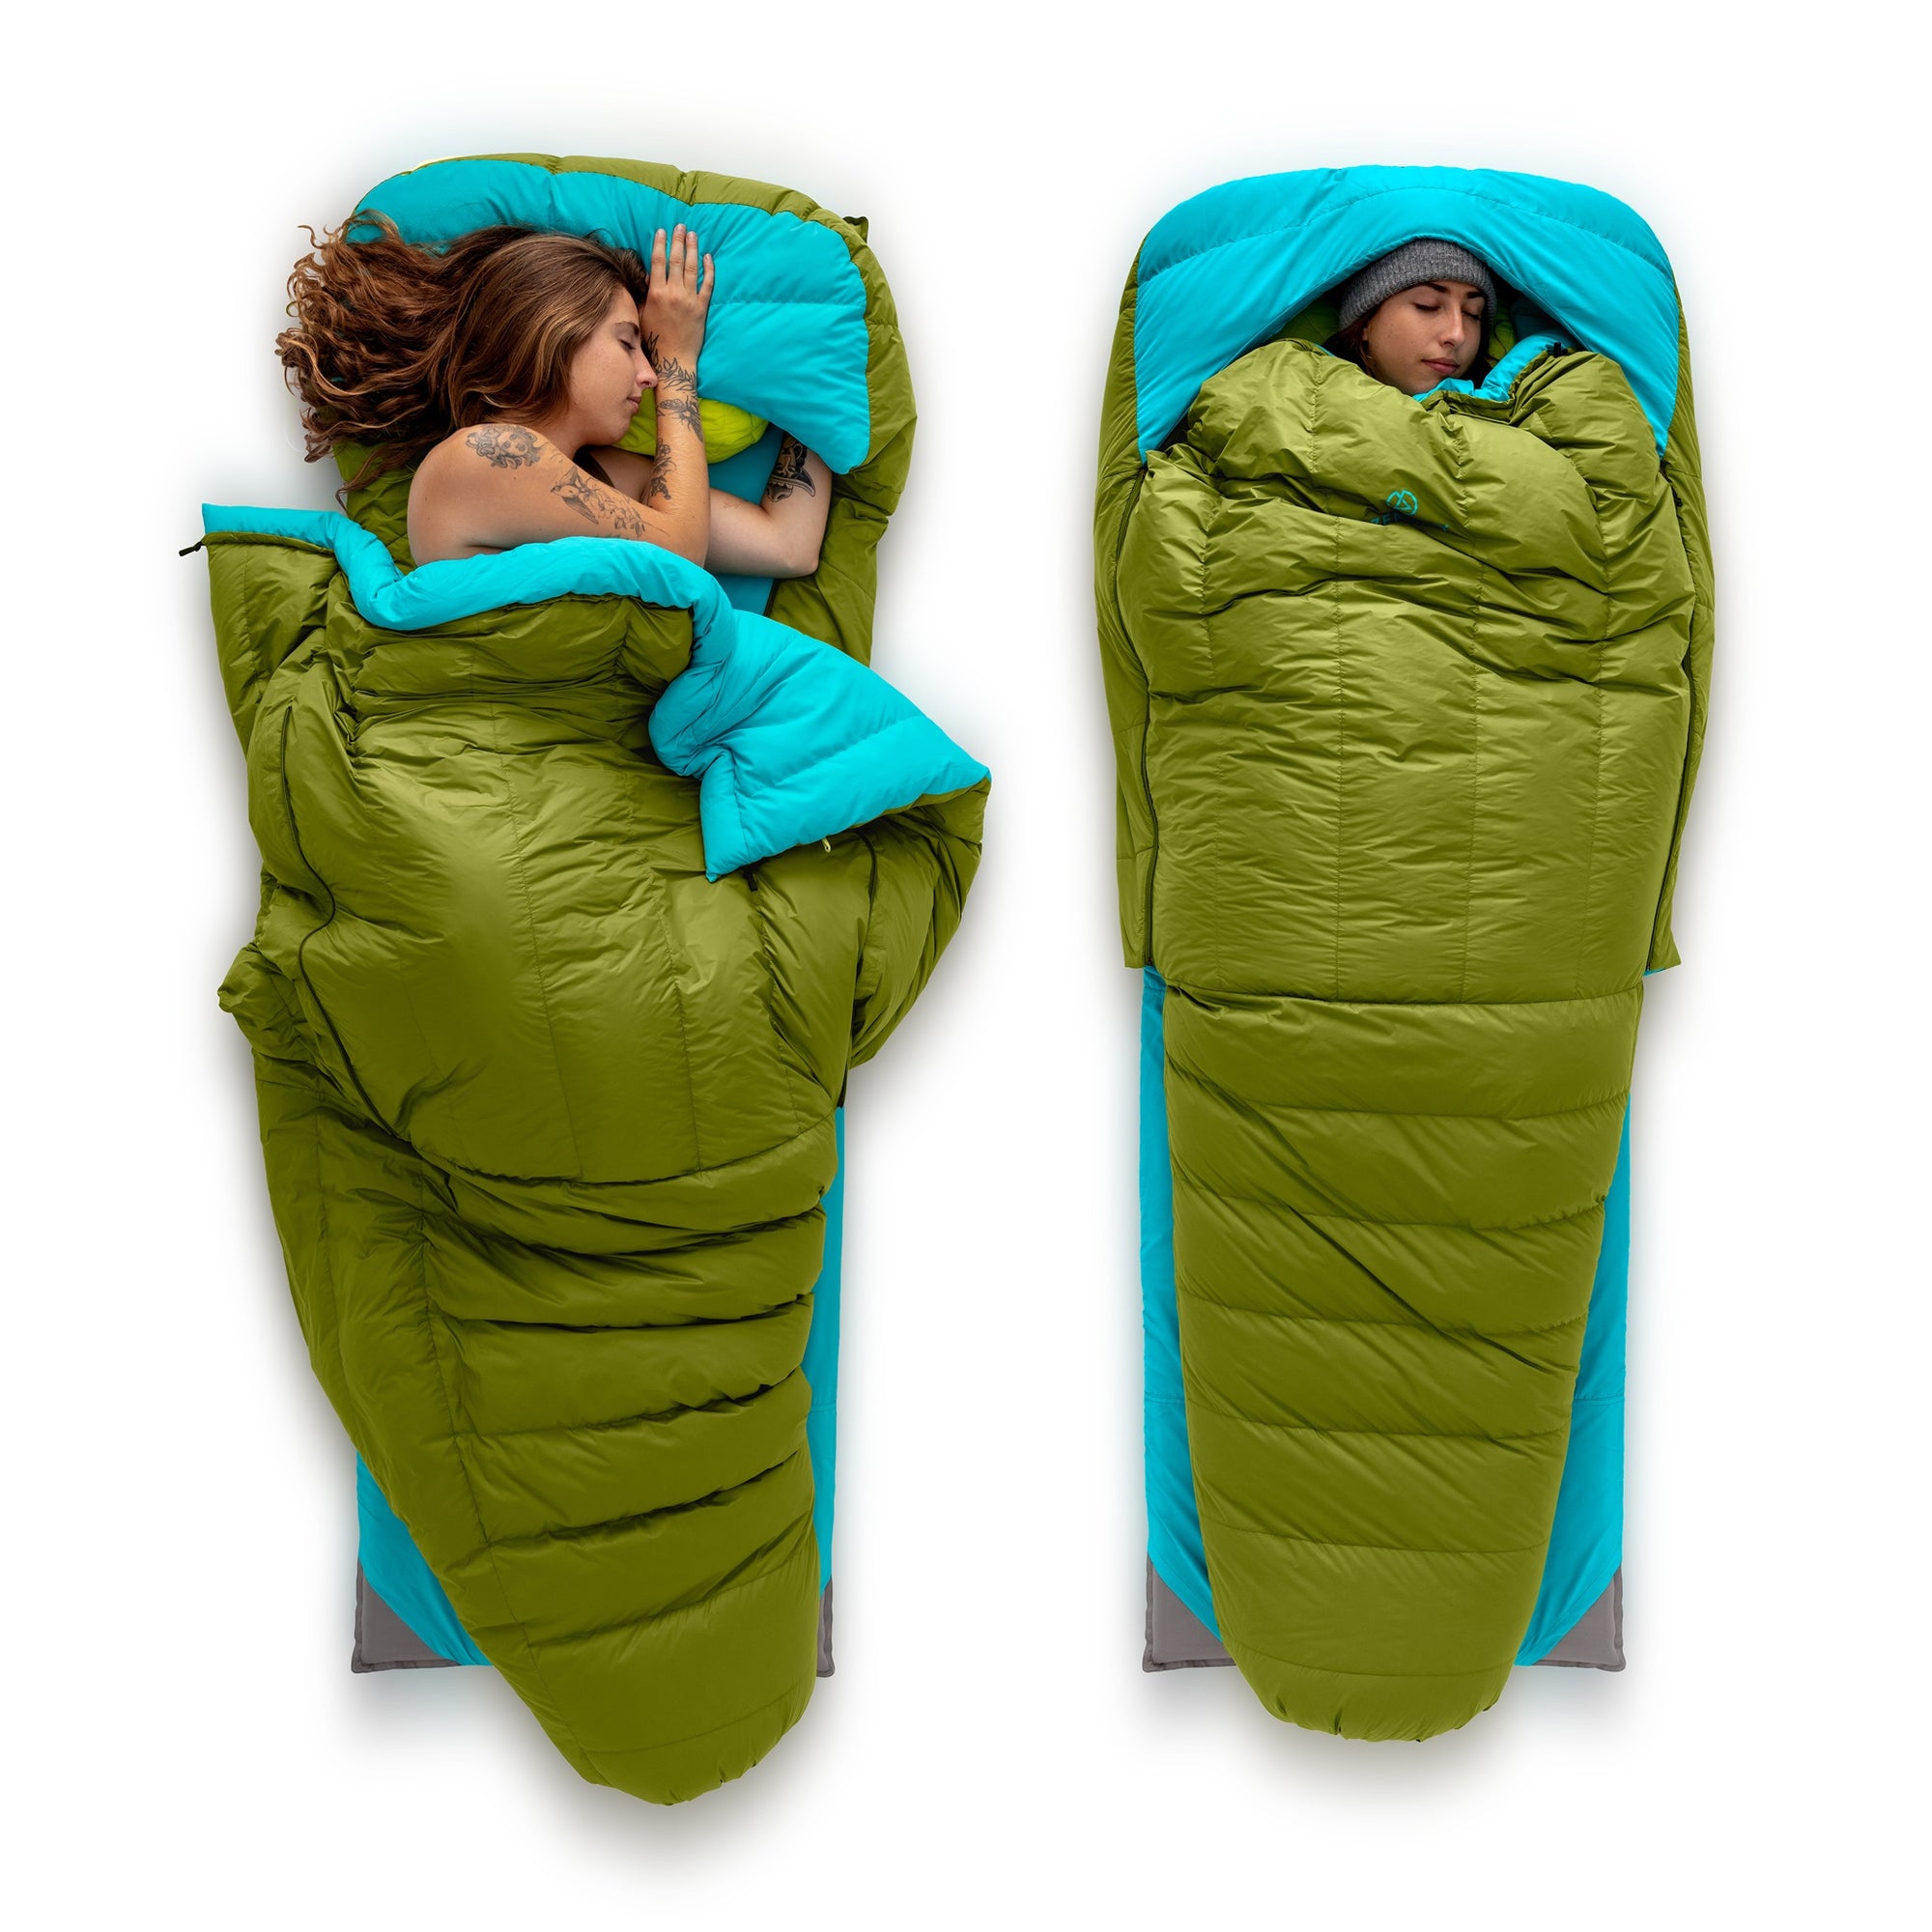 Zenbivy床睡袋允许你睡在任何位置,就像在你的床上。